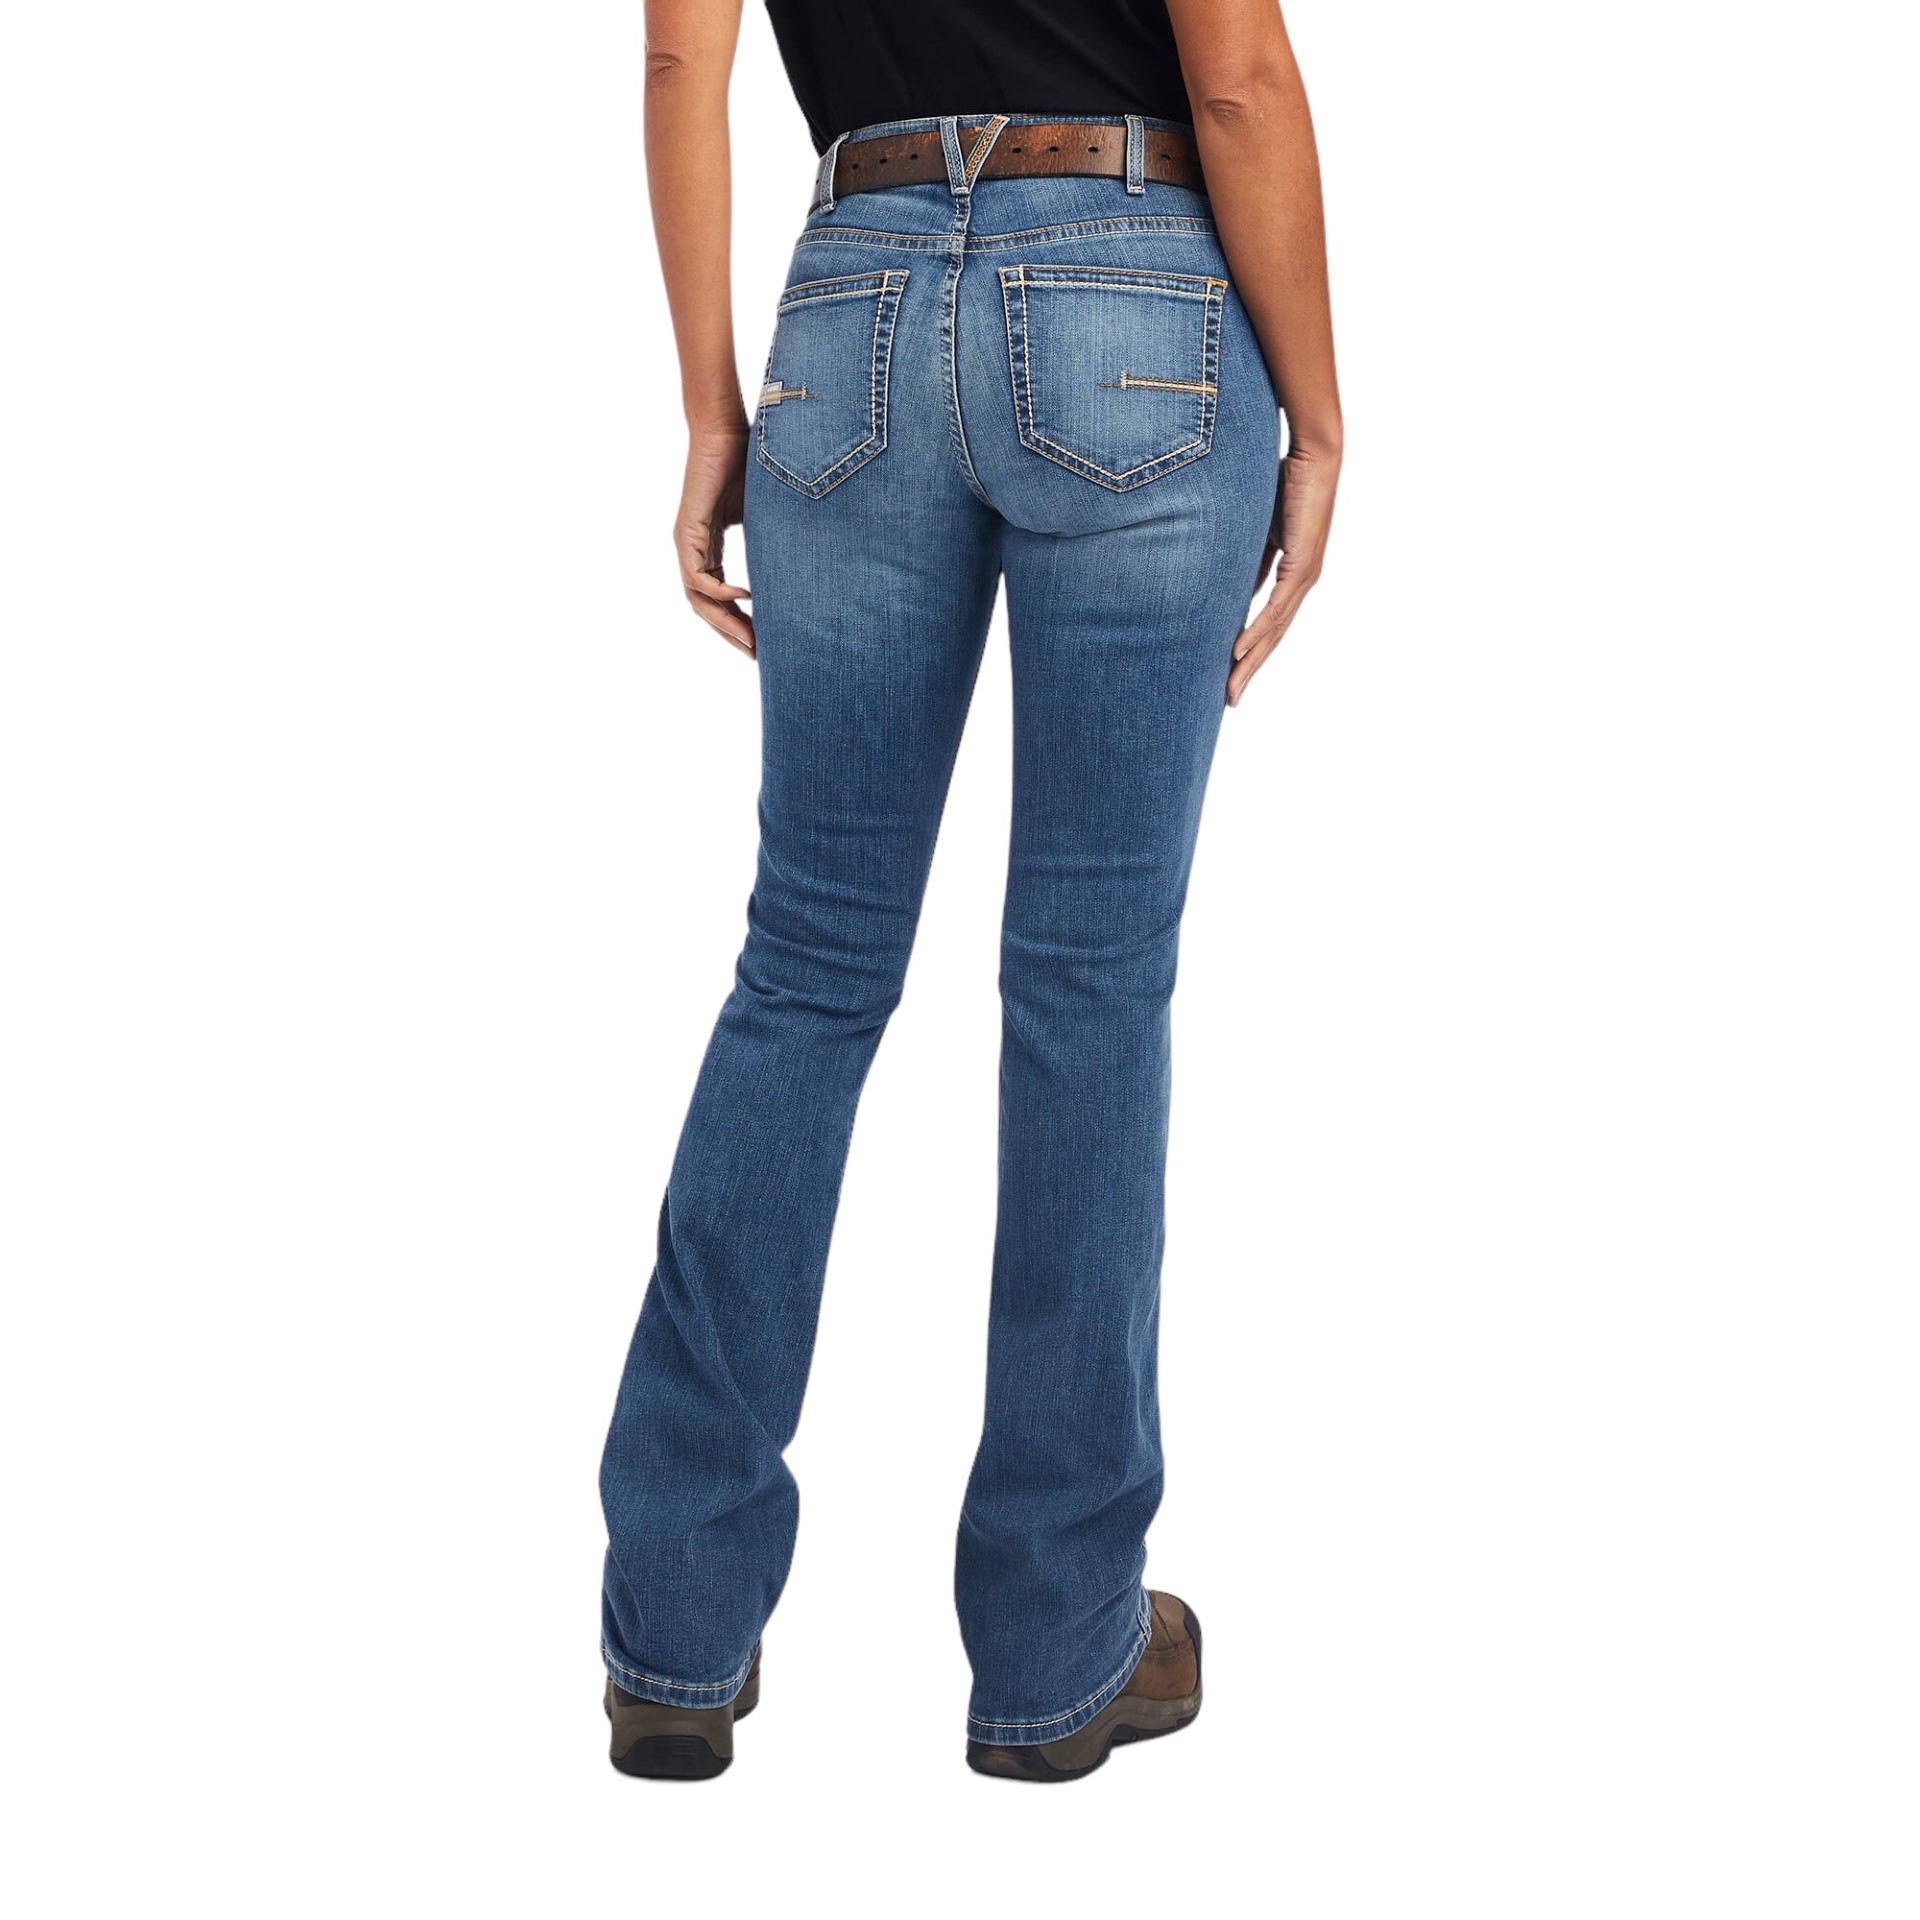 https://jimmyswesternwear.com/media/catalog/product/rdi/rdi/womens-ariat-rebar-riveter-boot-cut-jeans-10041067_1.jpg?width=265&height=265&store=default&image-type=image